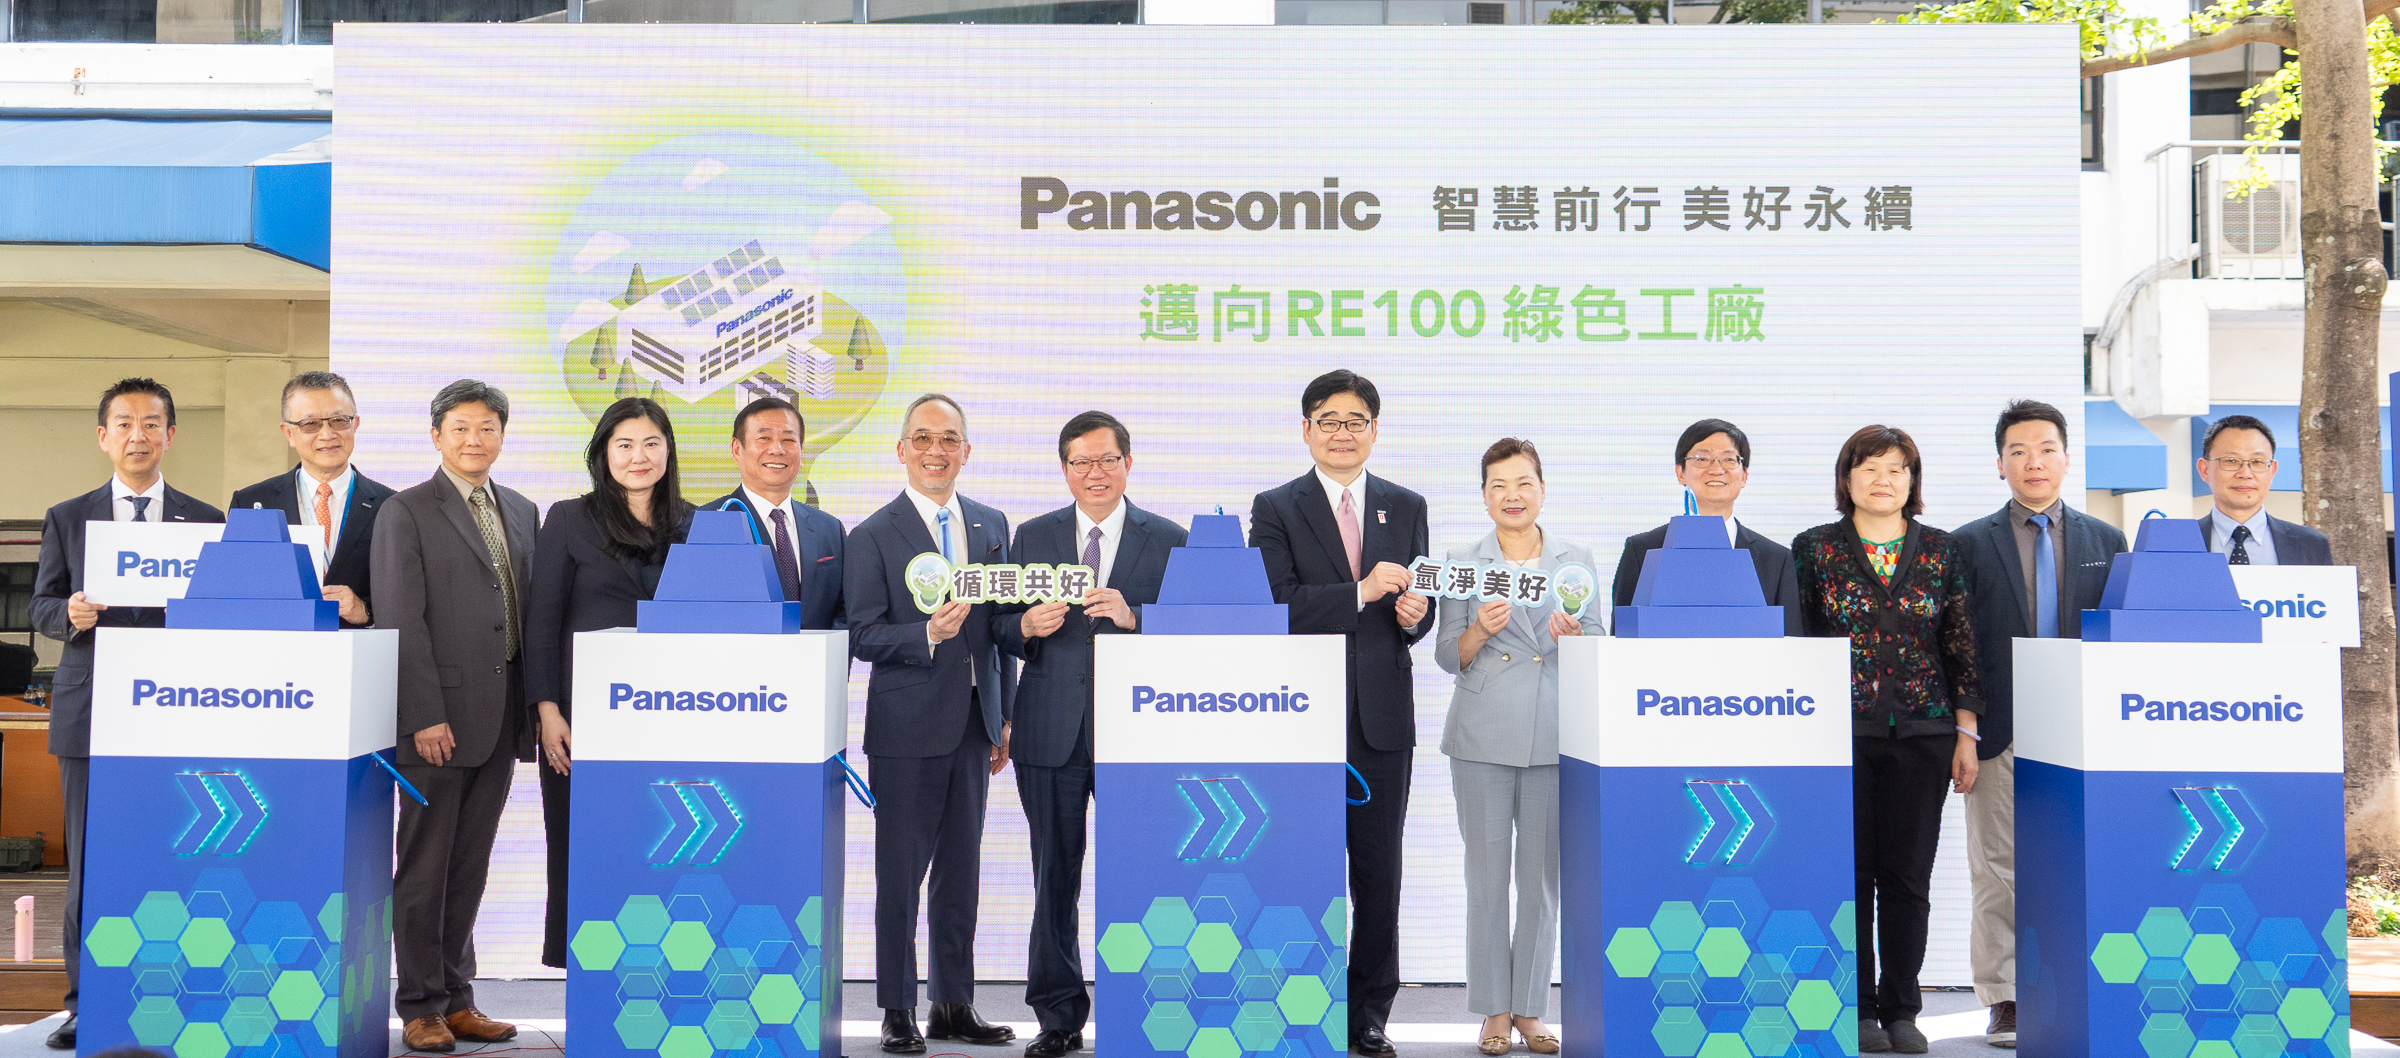 Panasonic 智慧前行 美好永續 邁向RE100綠色工廠 實踐永續低碳行動